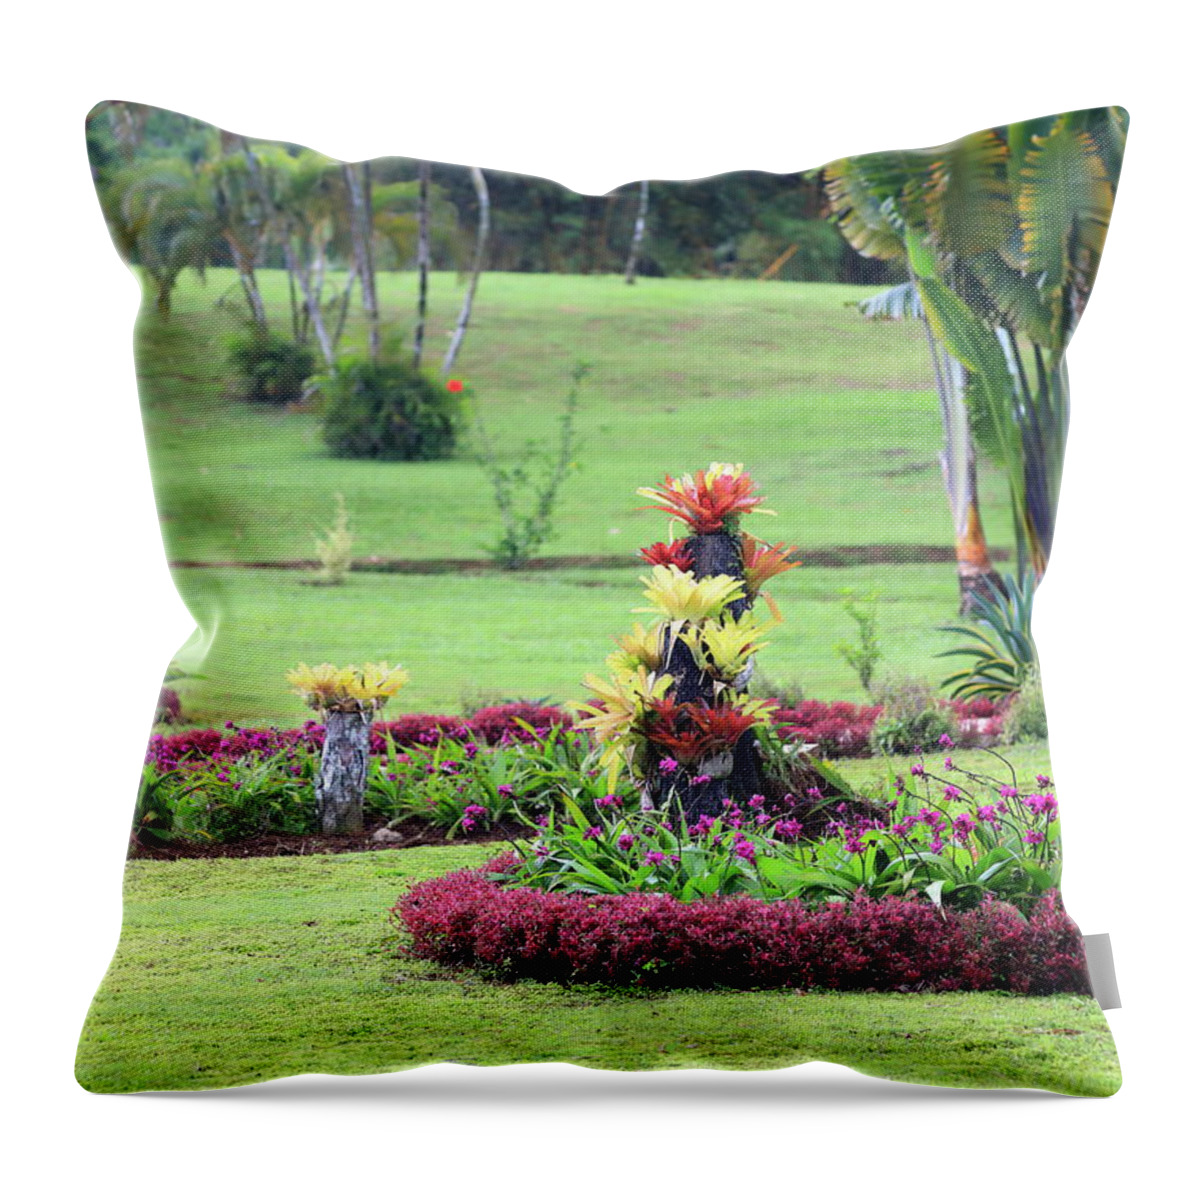 Western floral garden Throw Pillow